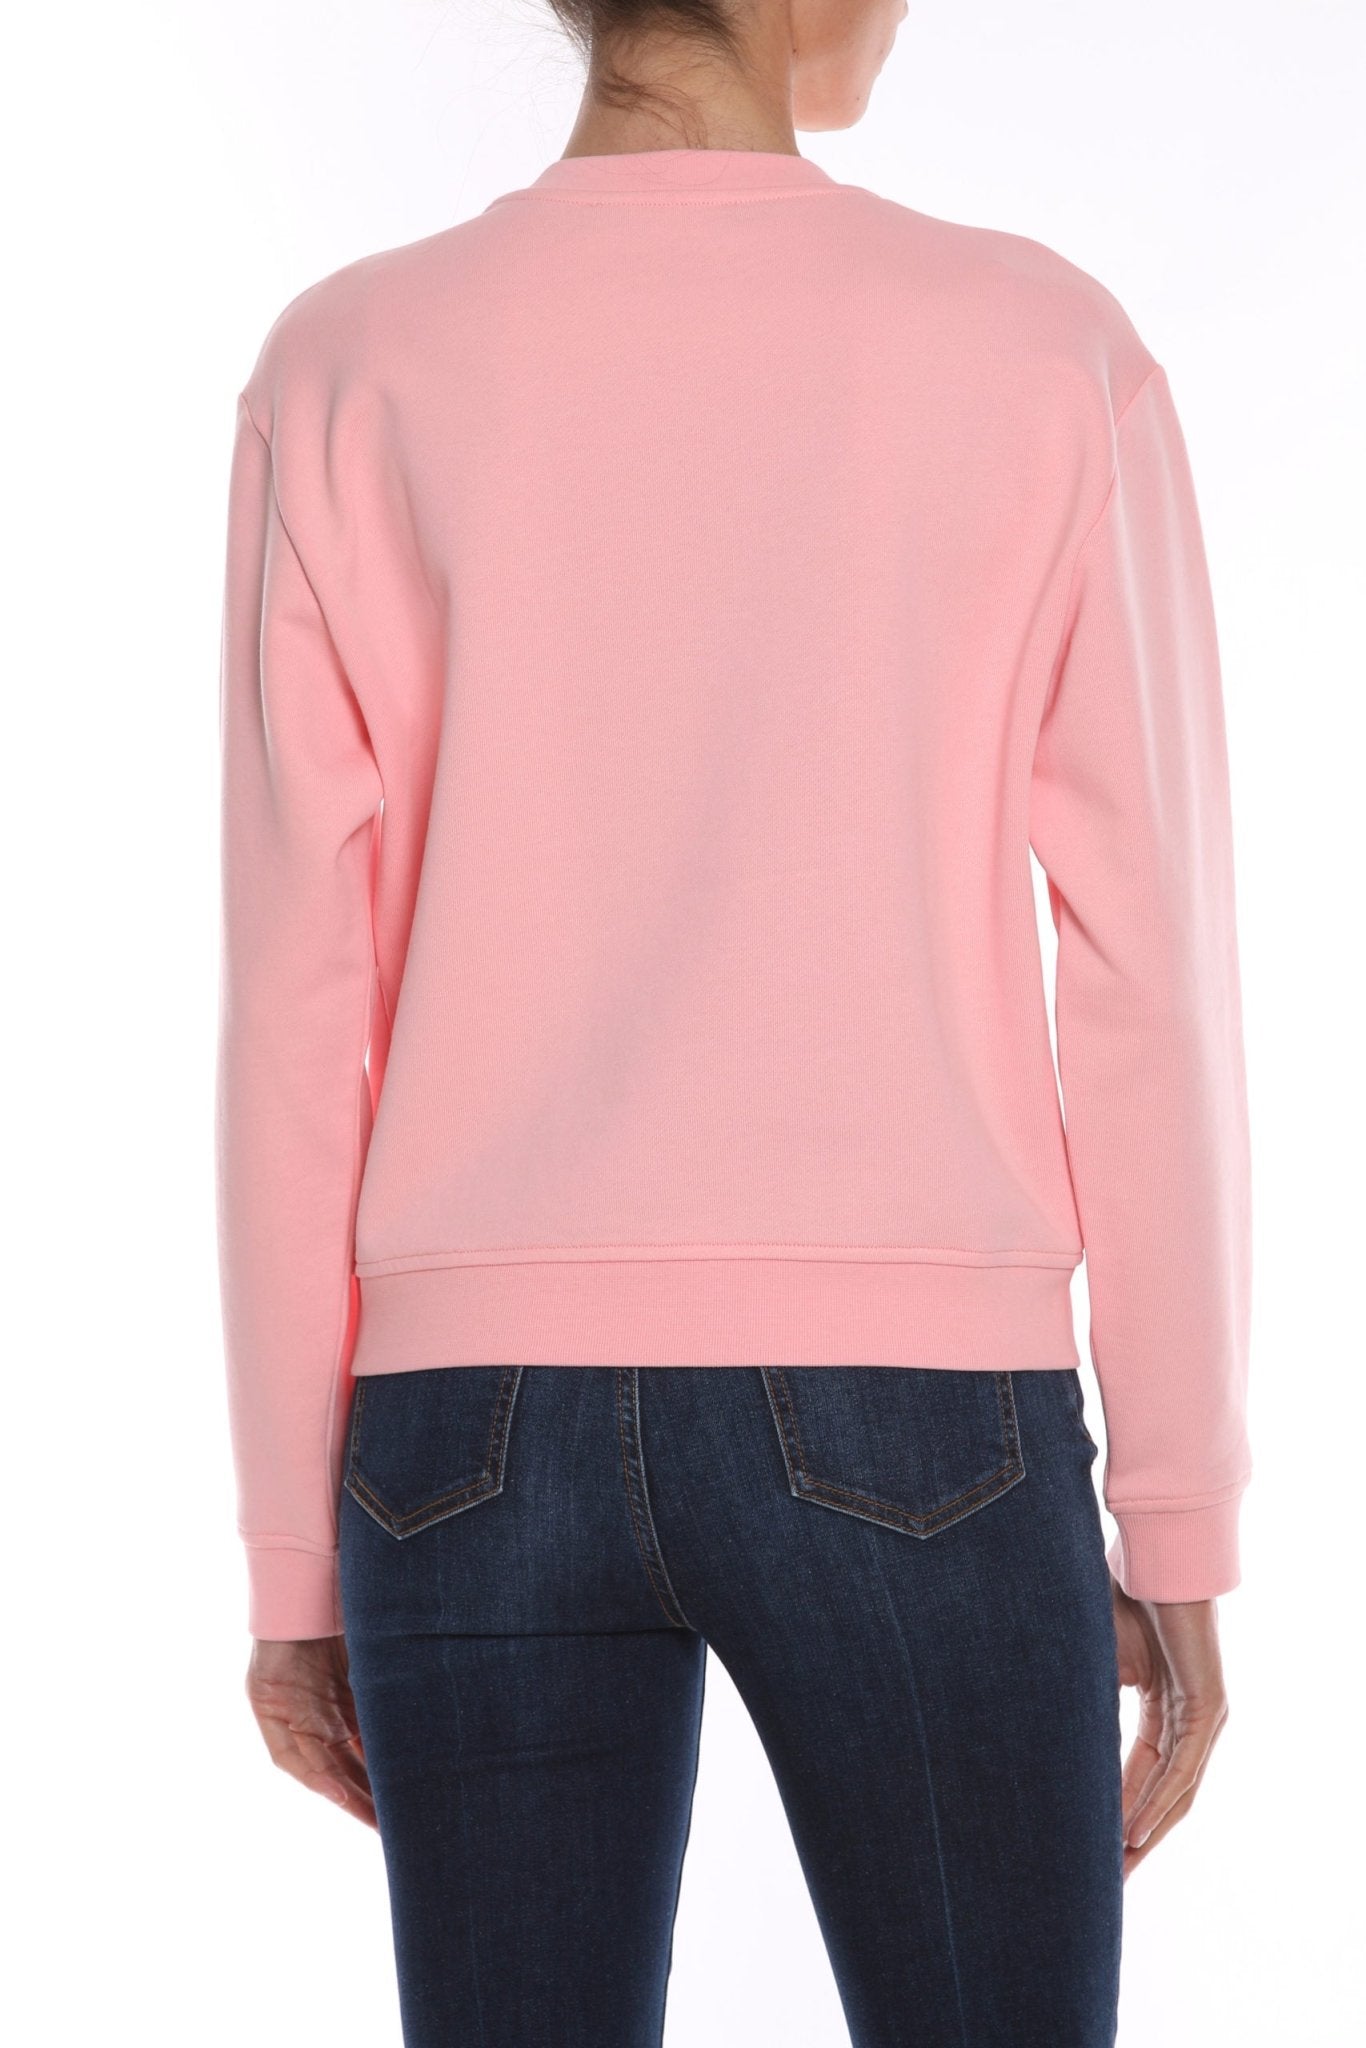 Love Moschino Pink Cotton Sweater - Fizigo